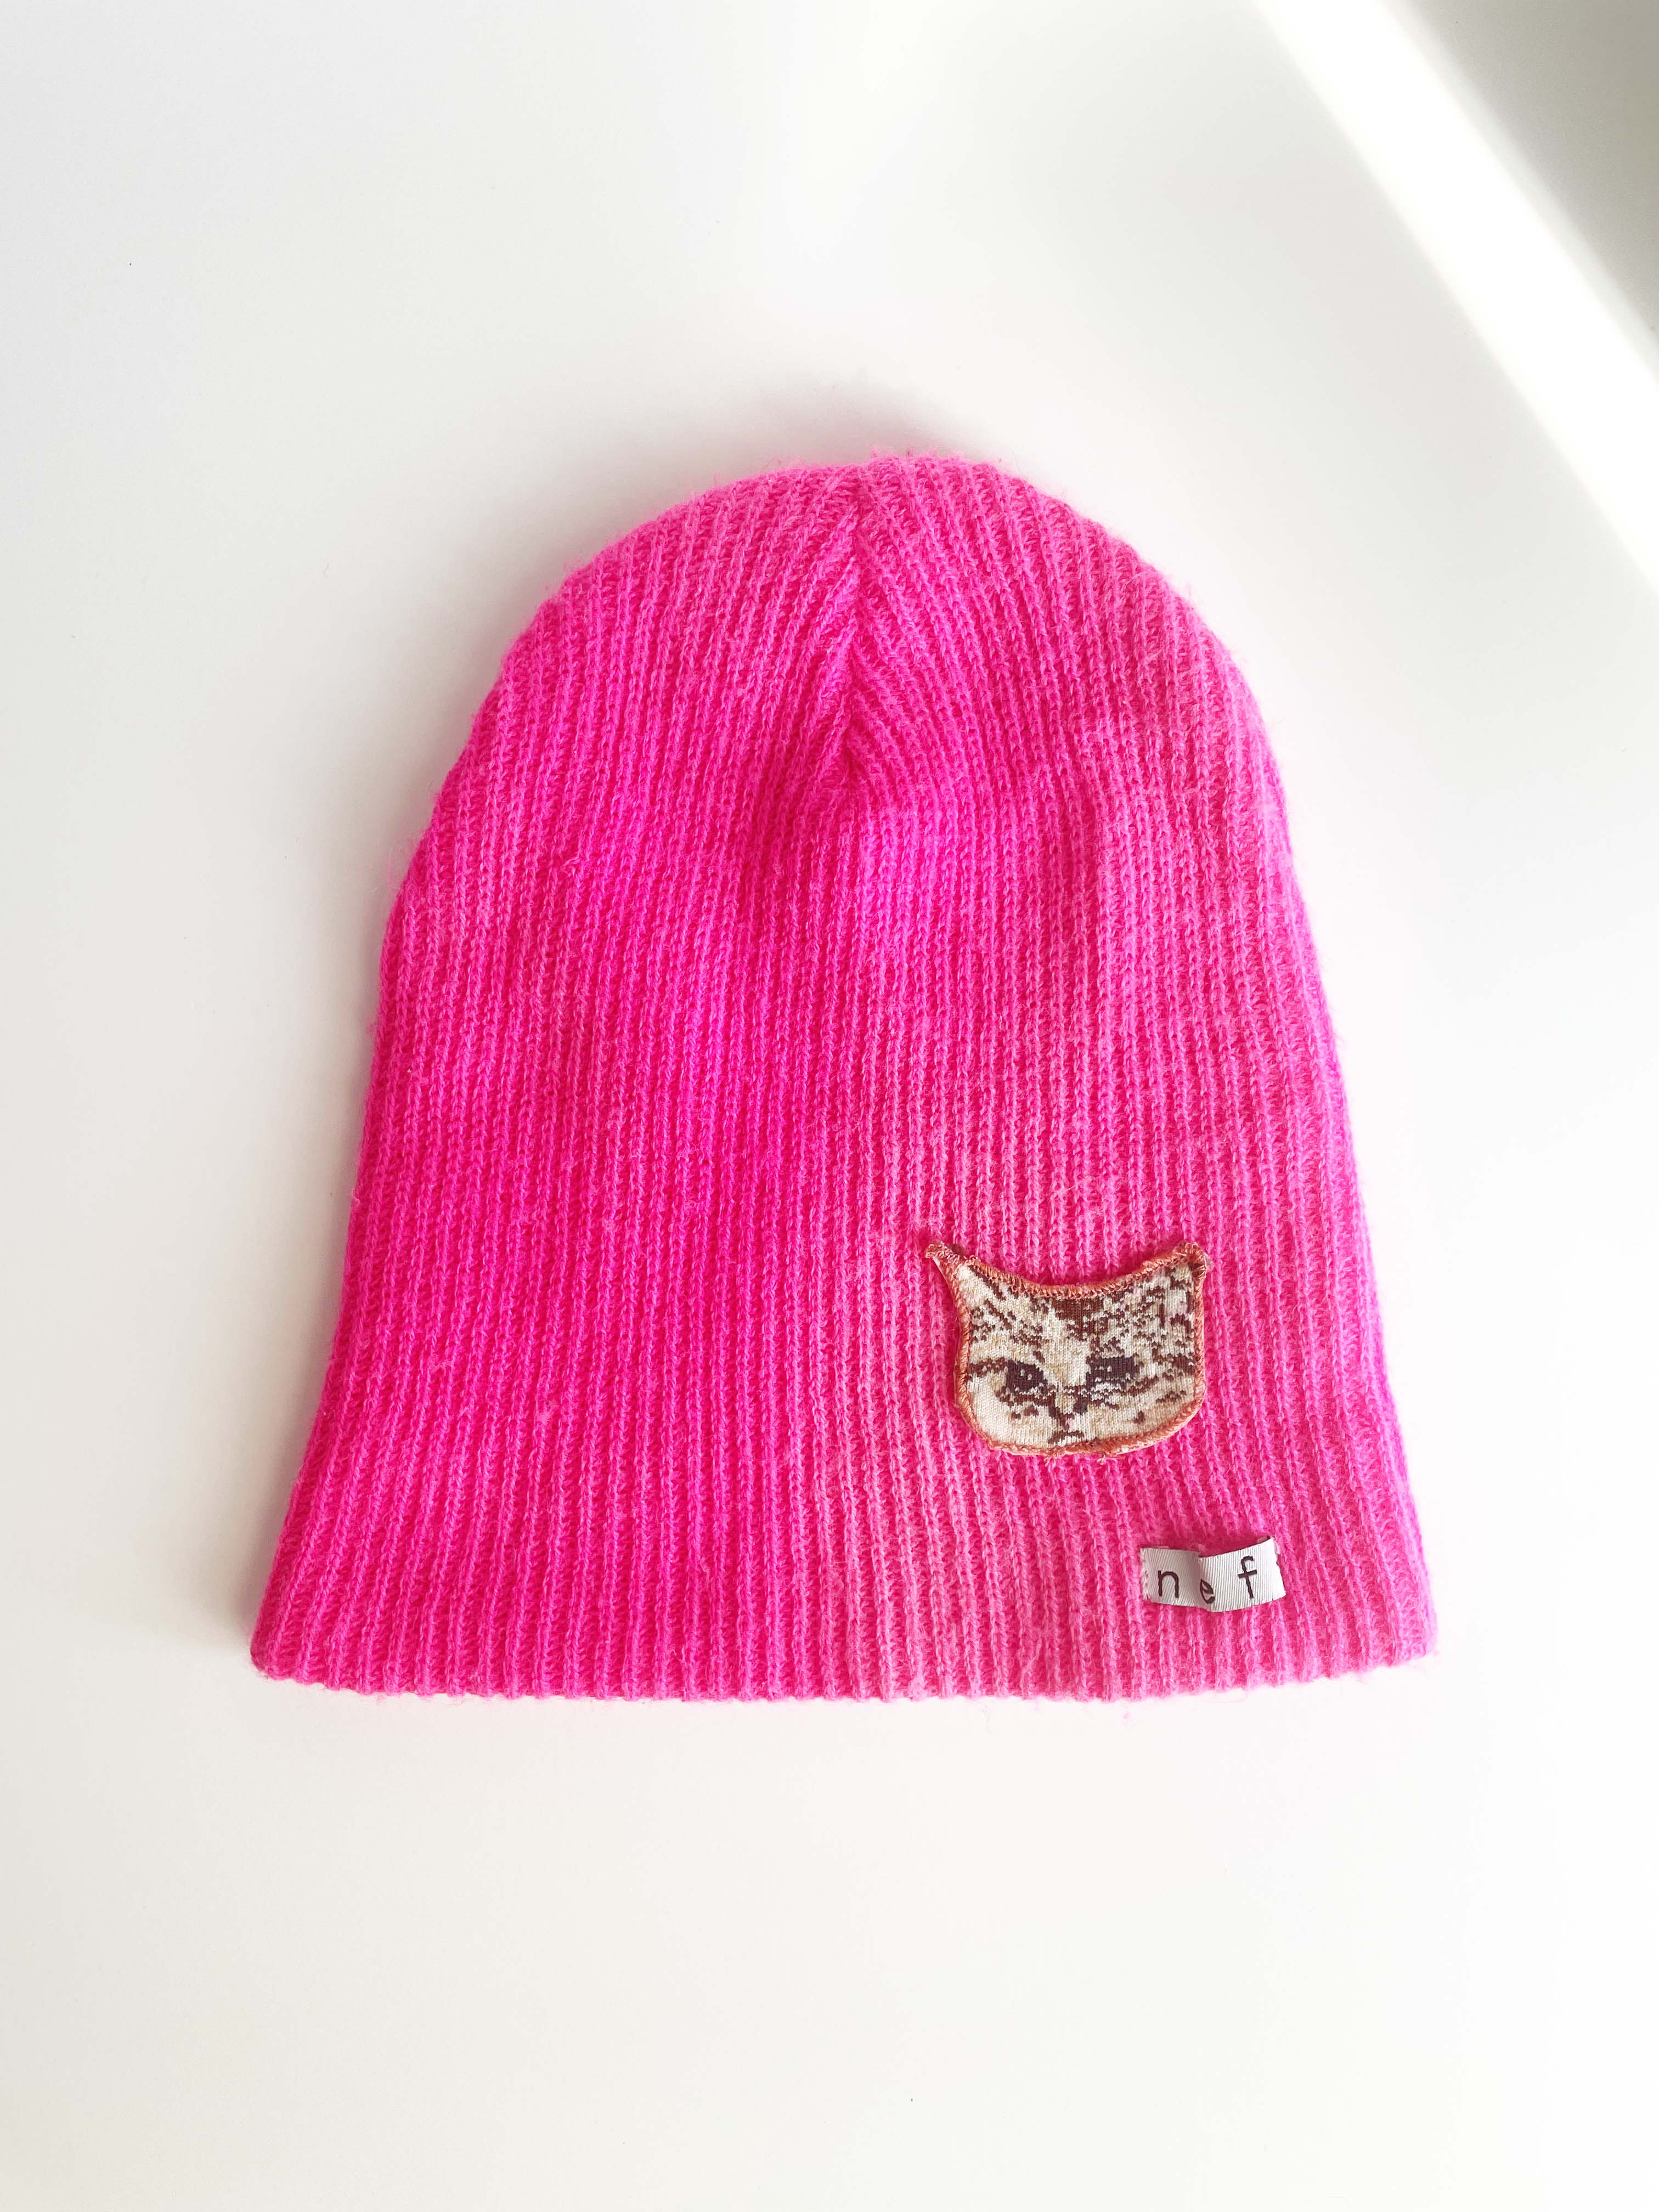 Sad cat head applique on hot pink knit hat.